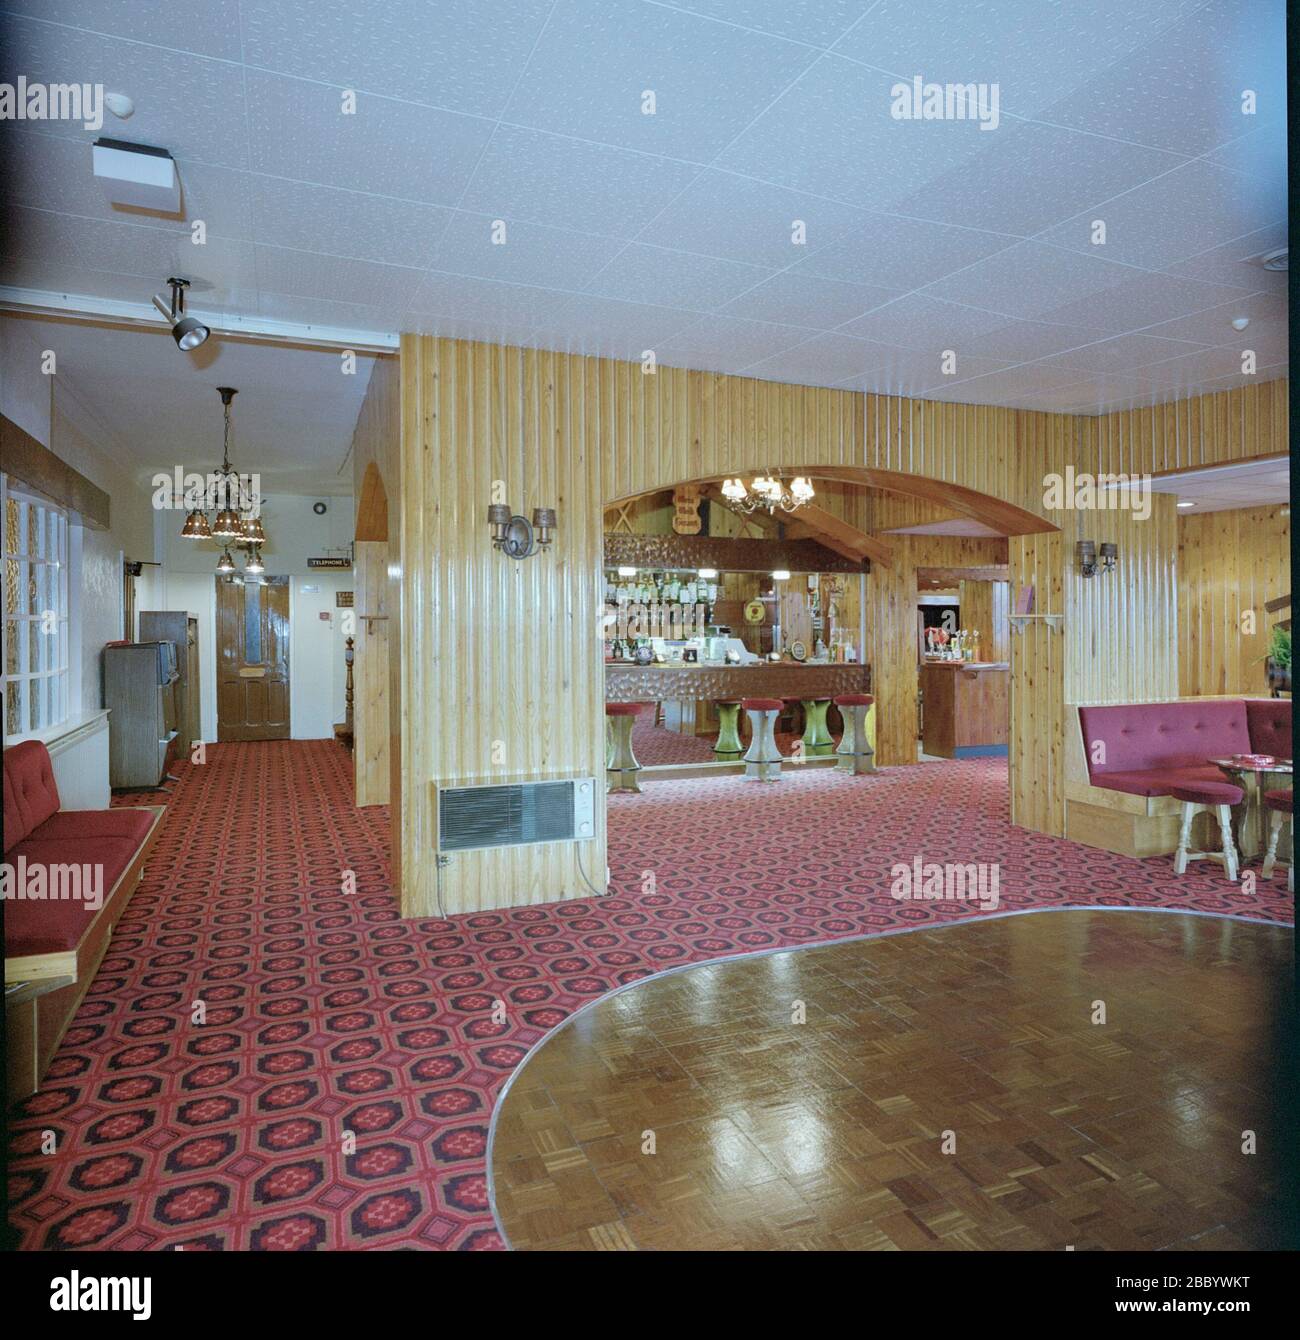 1986 Dated restaurant interior, West Yorkshire, Northern England, UK Stock Photo